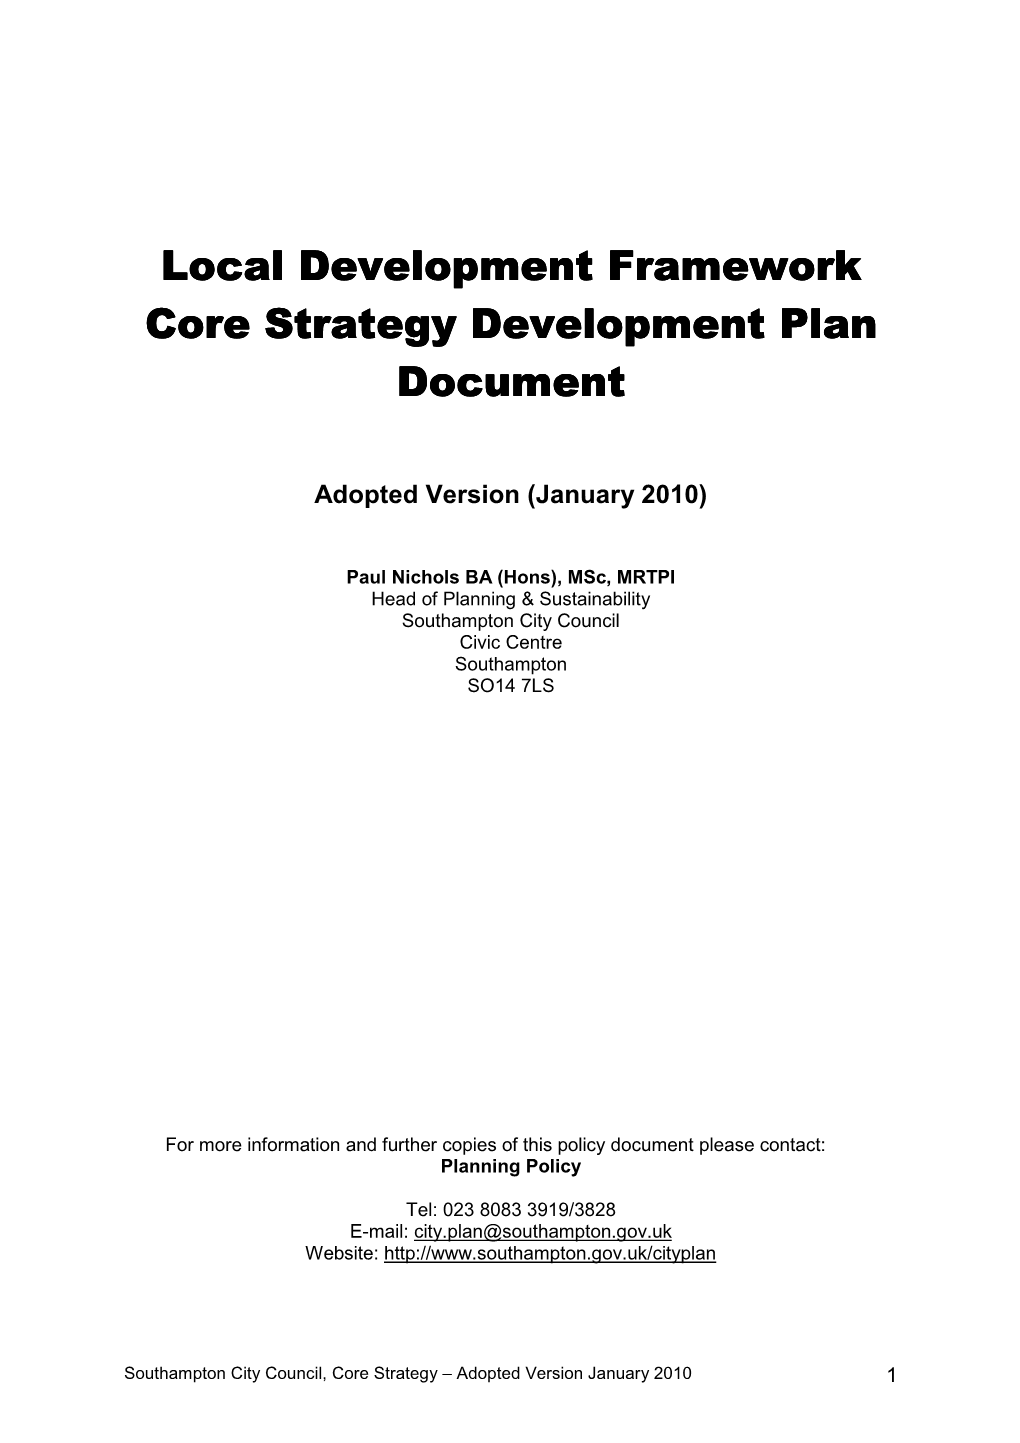 Local Development Framework Local Development Framework Core